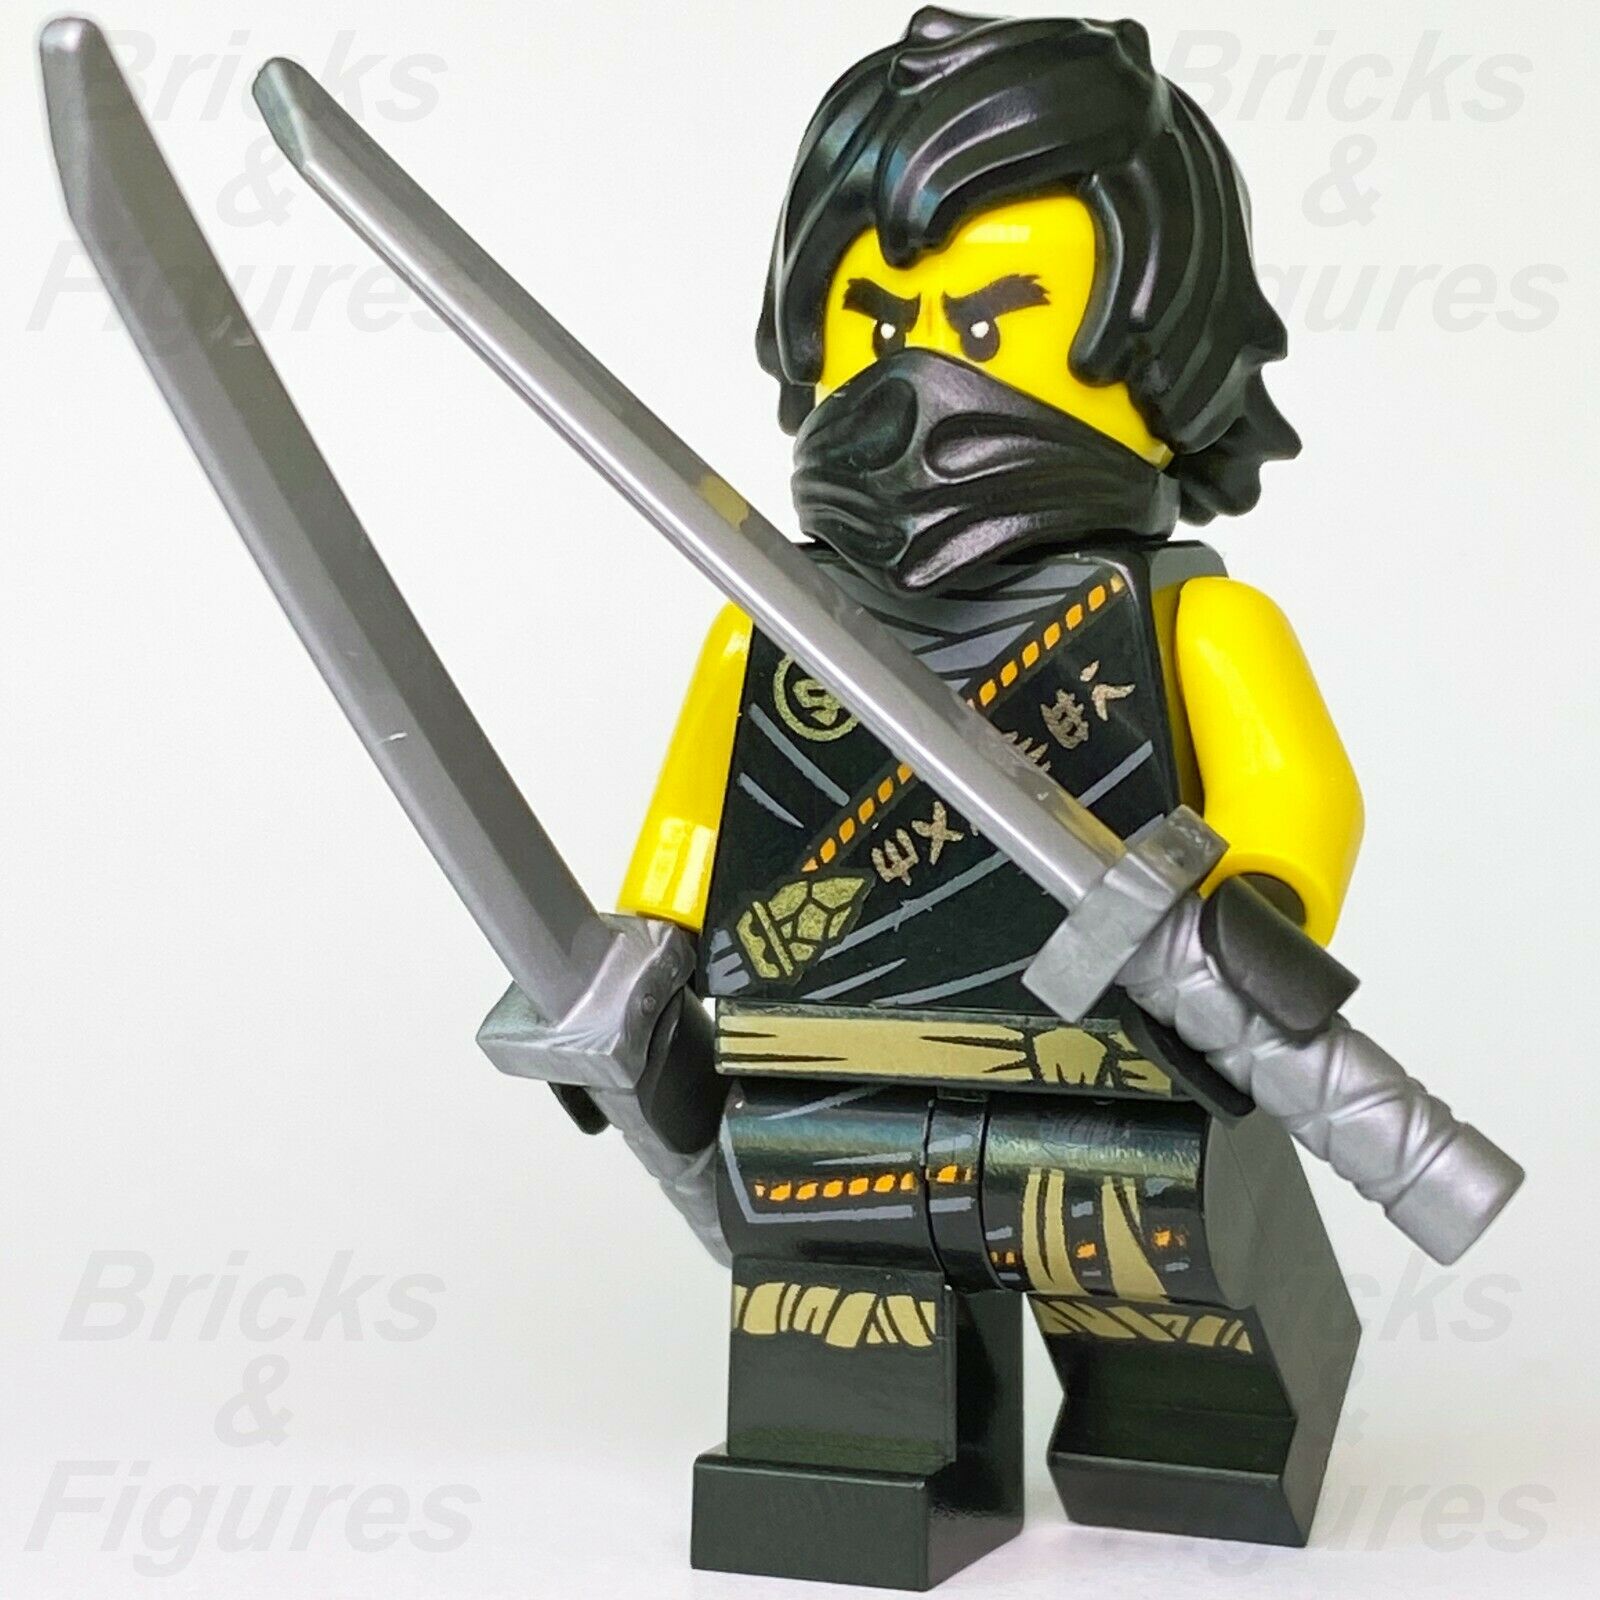 New Ninjago LEGO Cole Legacy Rebooted Black Ninja Minifigure with Swords 71669 - Bricks & Figures